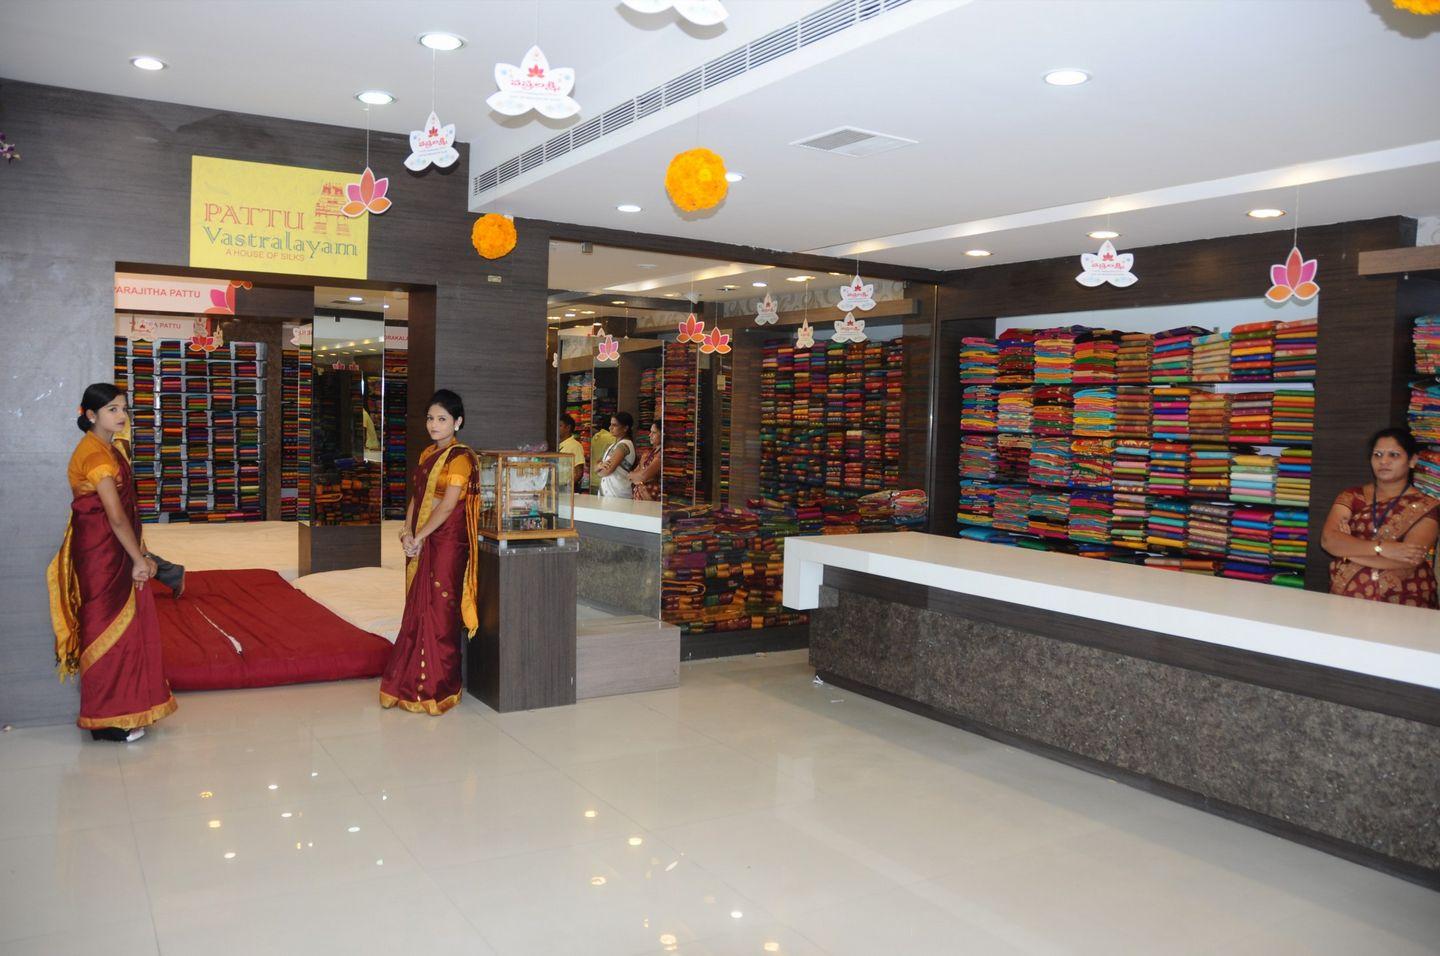 Rashi Khanna Launches Vastralakshmi Wedding Mall